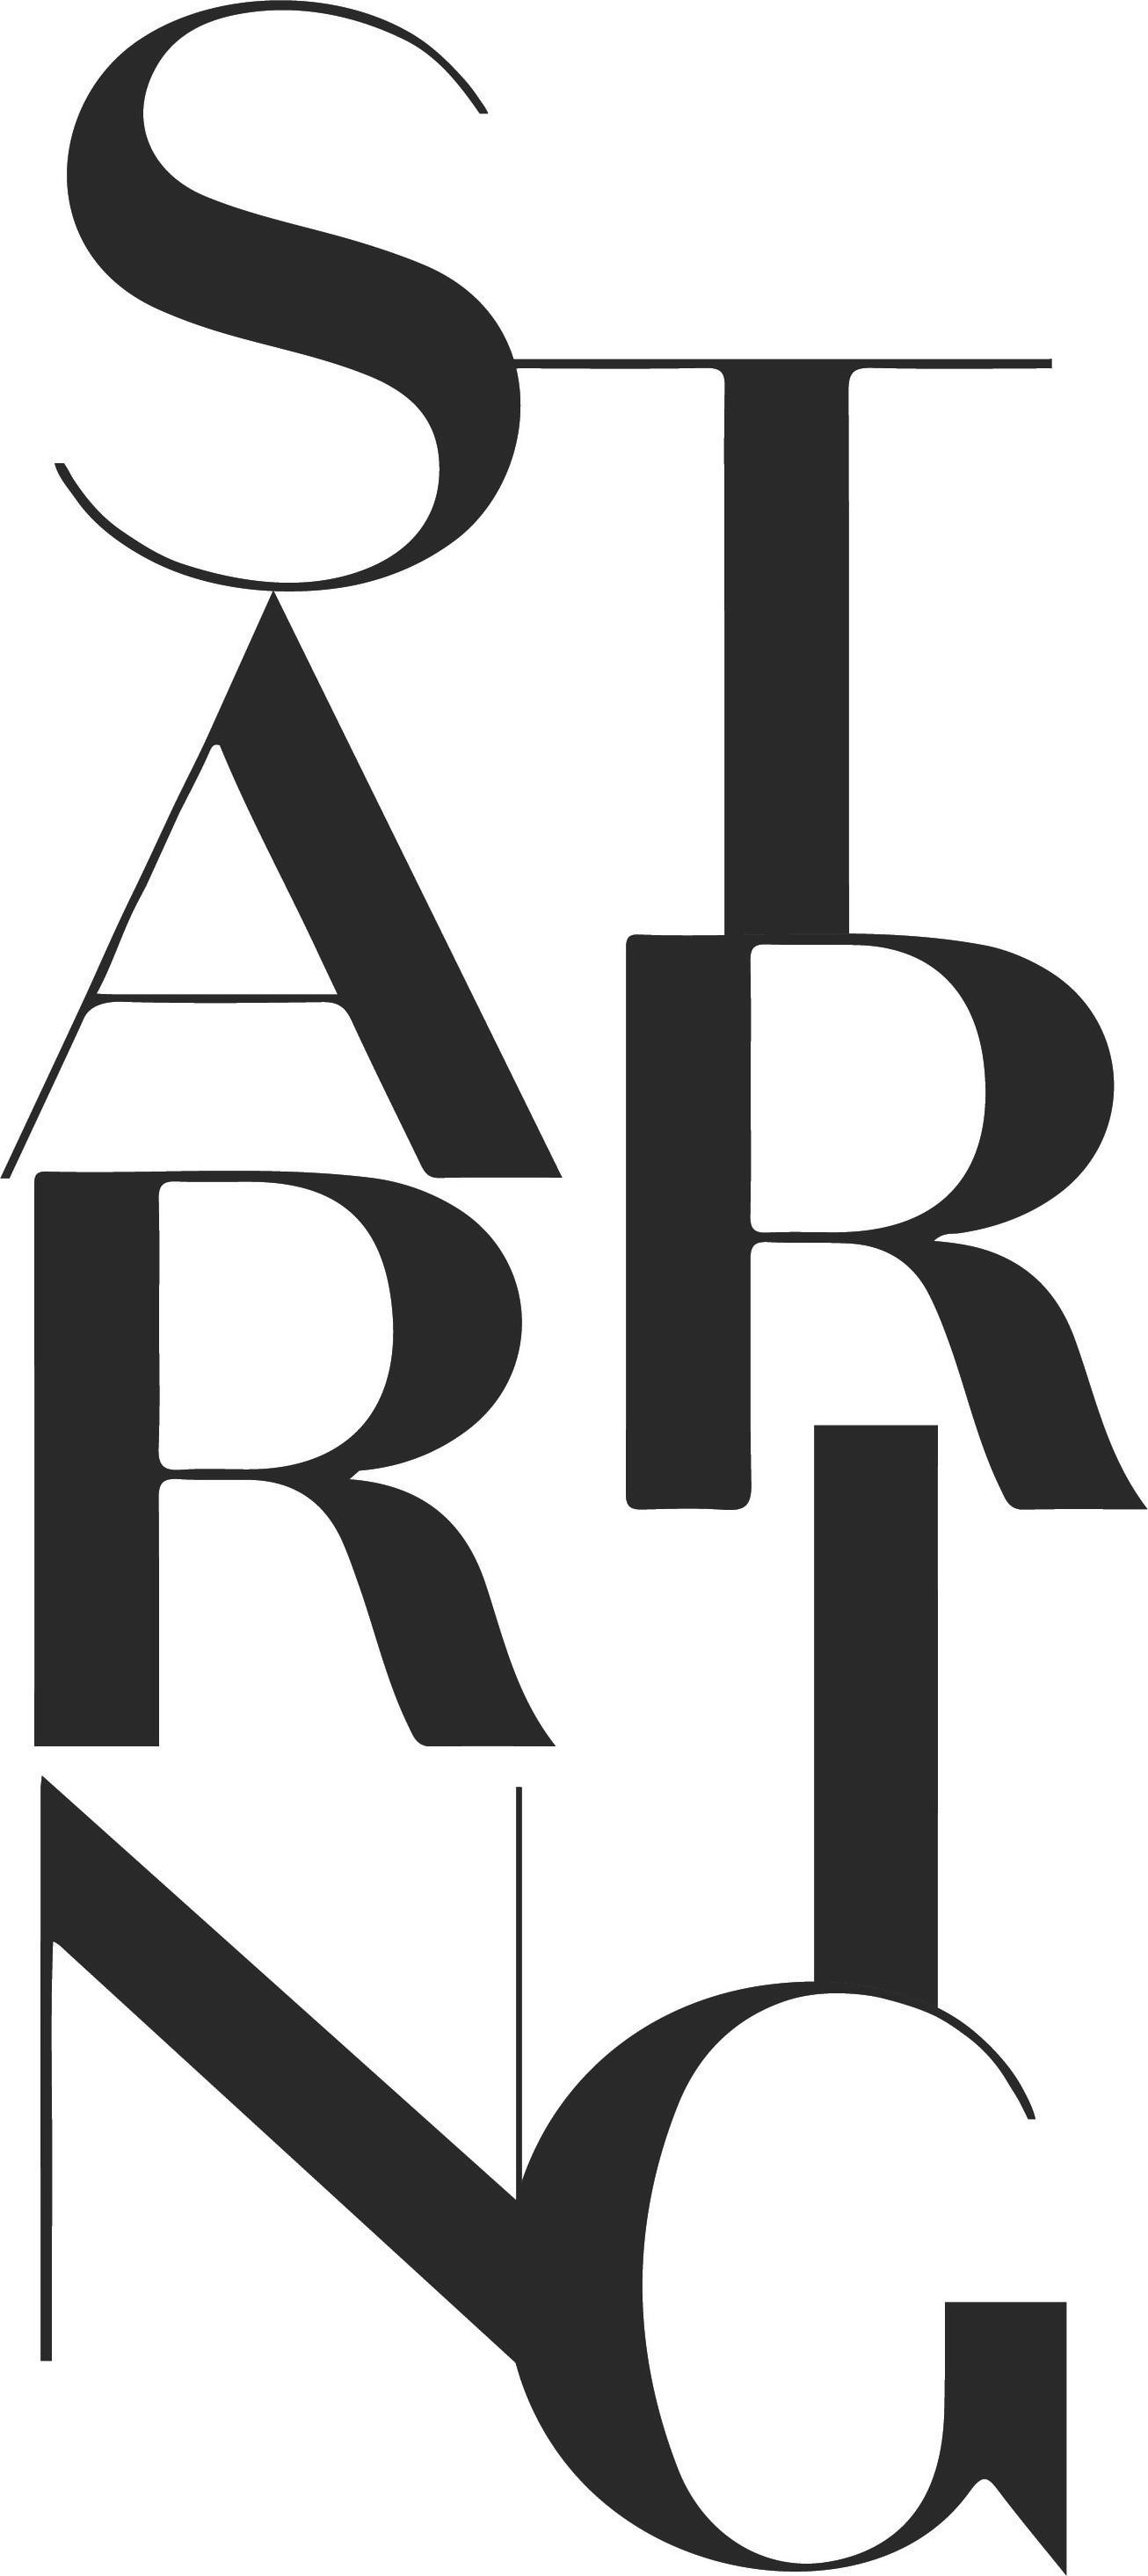 Trademark Logo STARRING